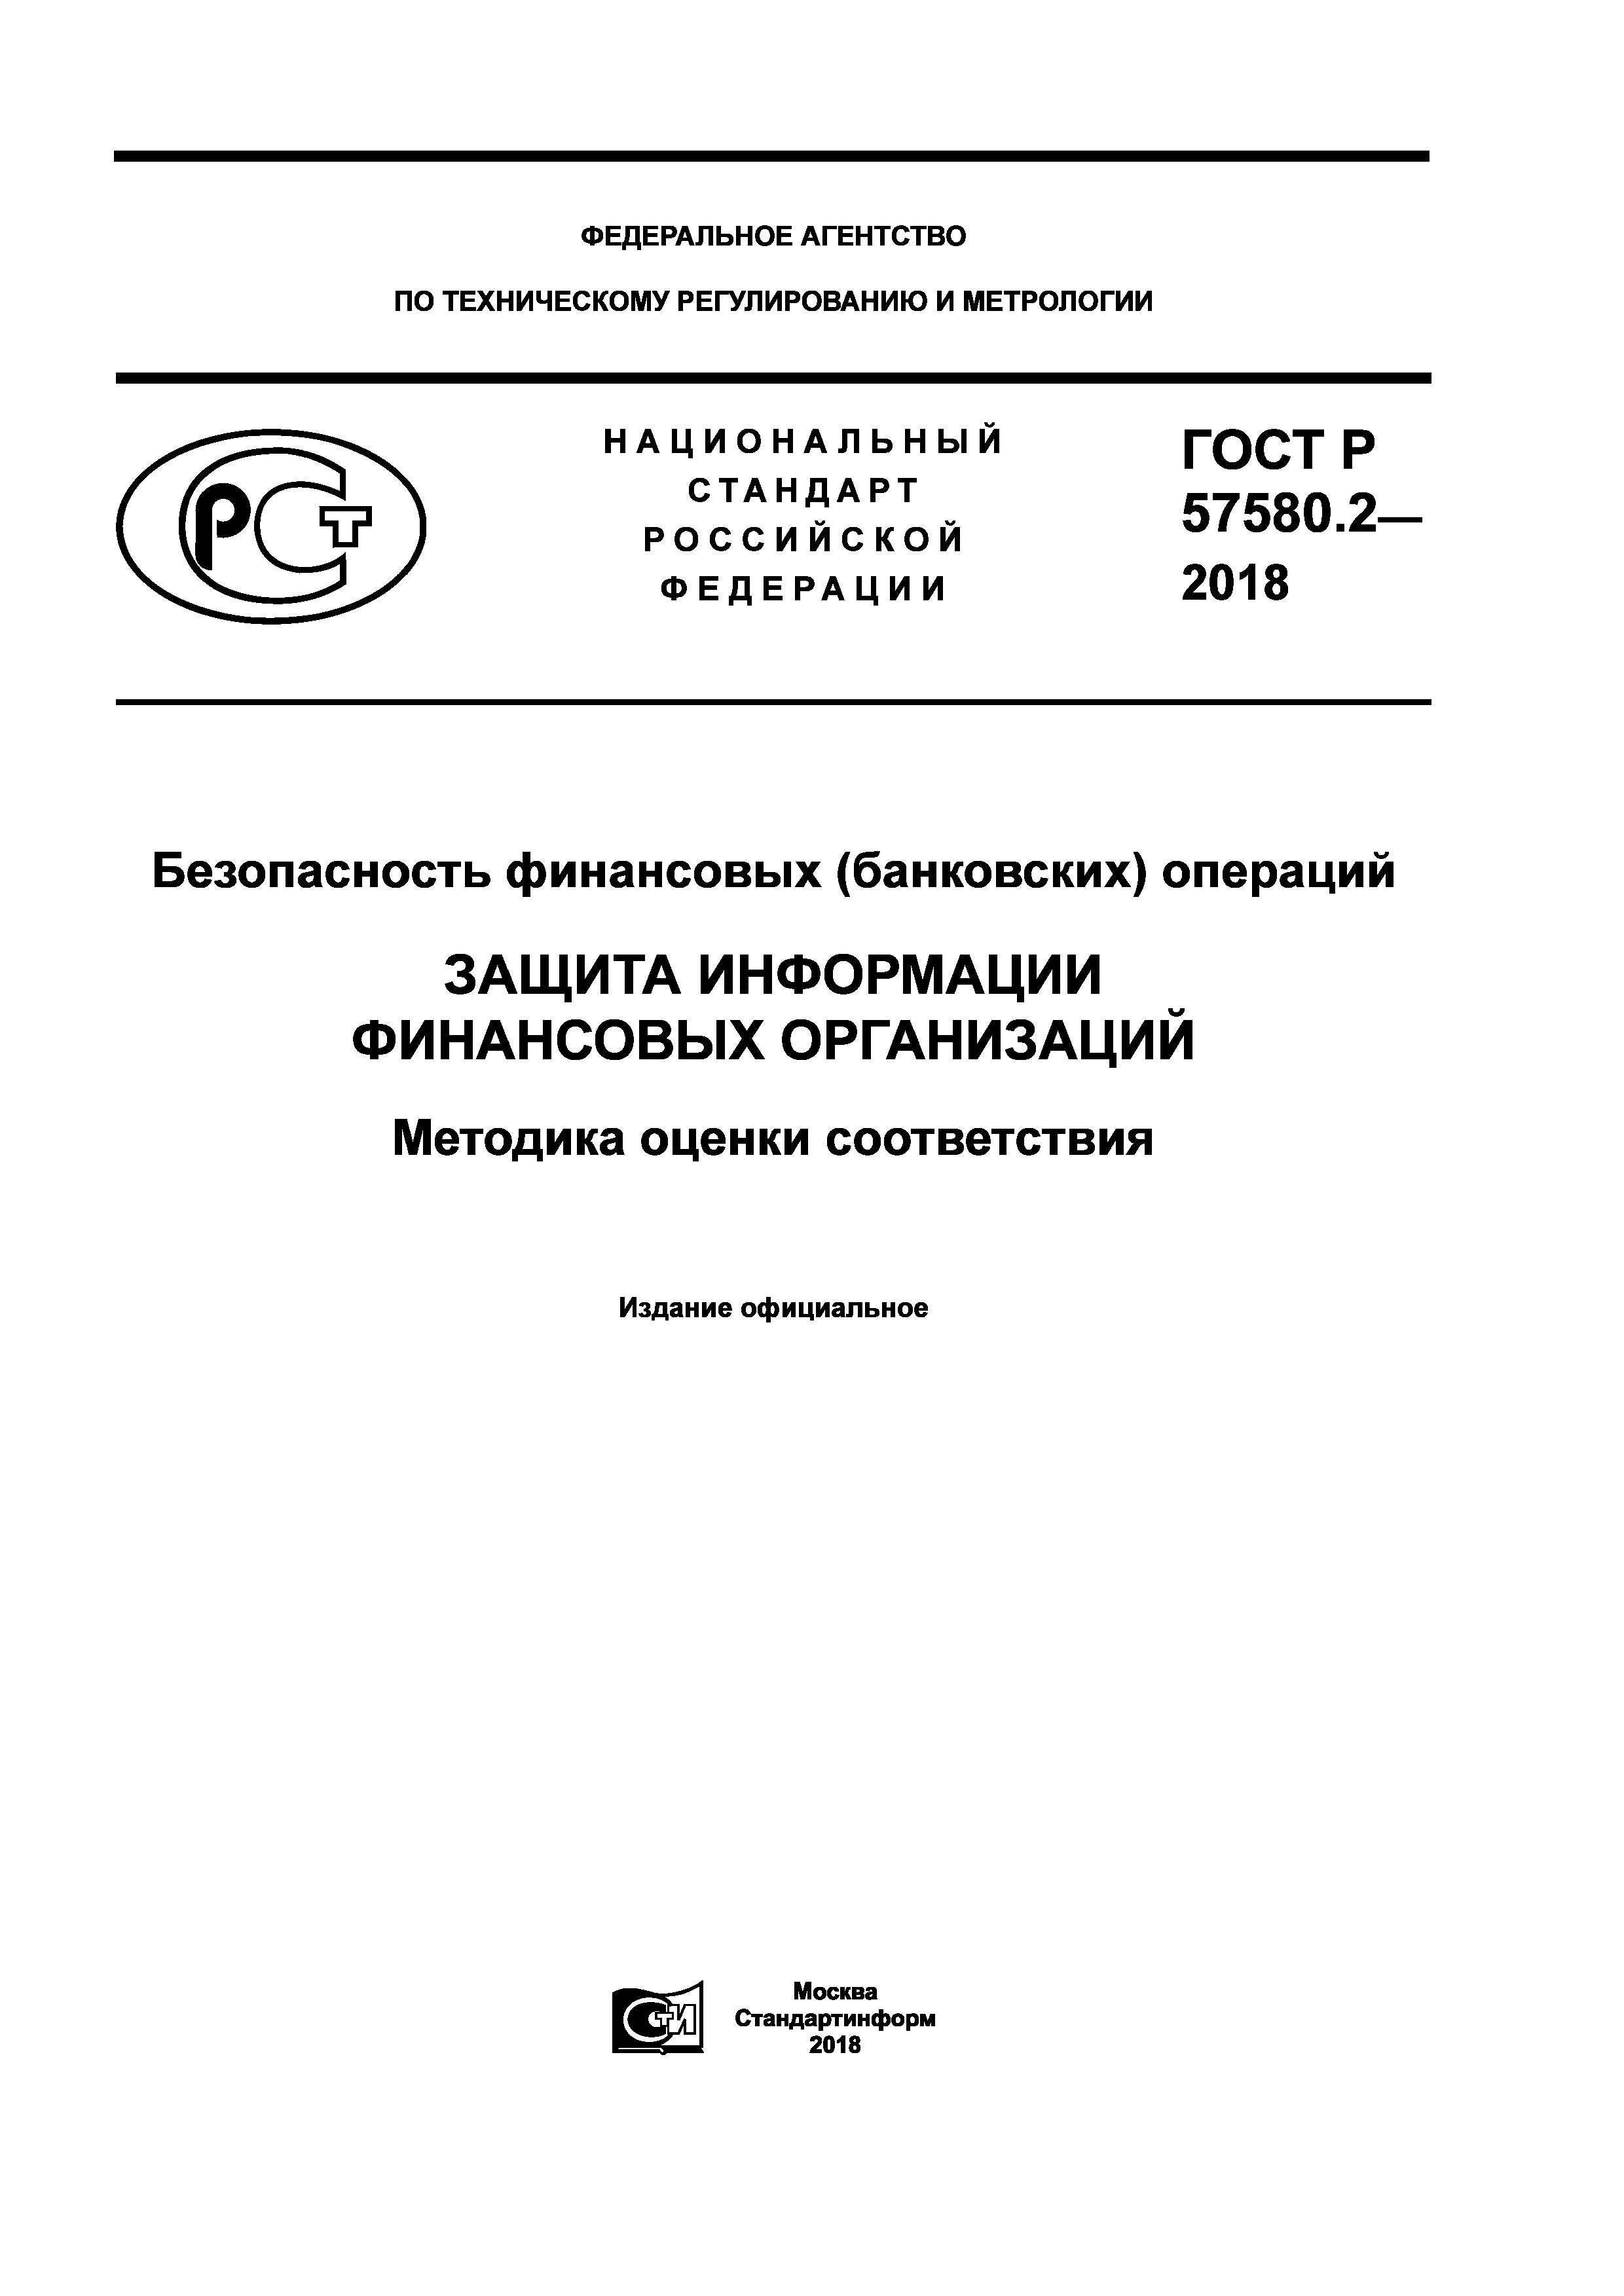 ГОСТ Р 57580.2-2018